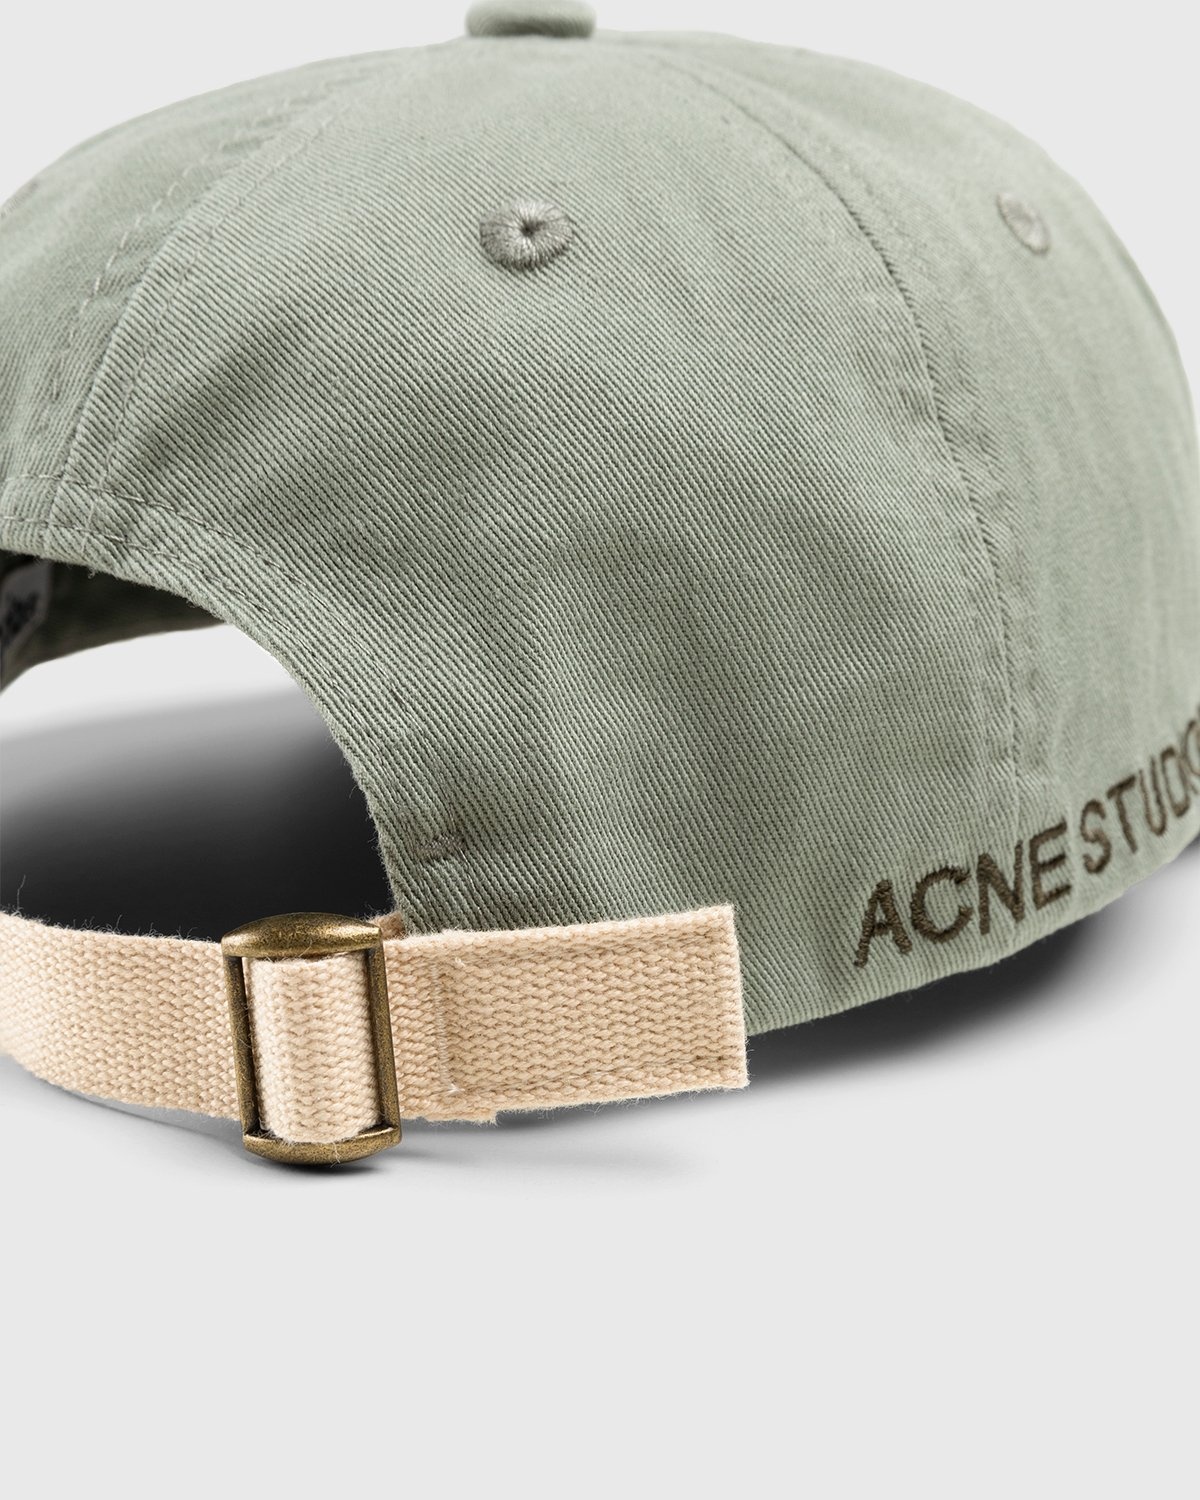 Acne Studios – Cotton Baseball Cap Sage Green - Caps - Green - Image 4